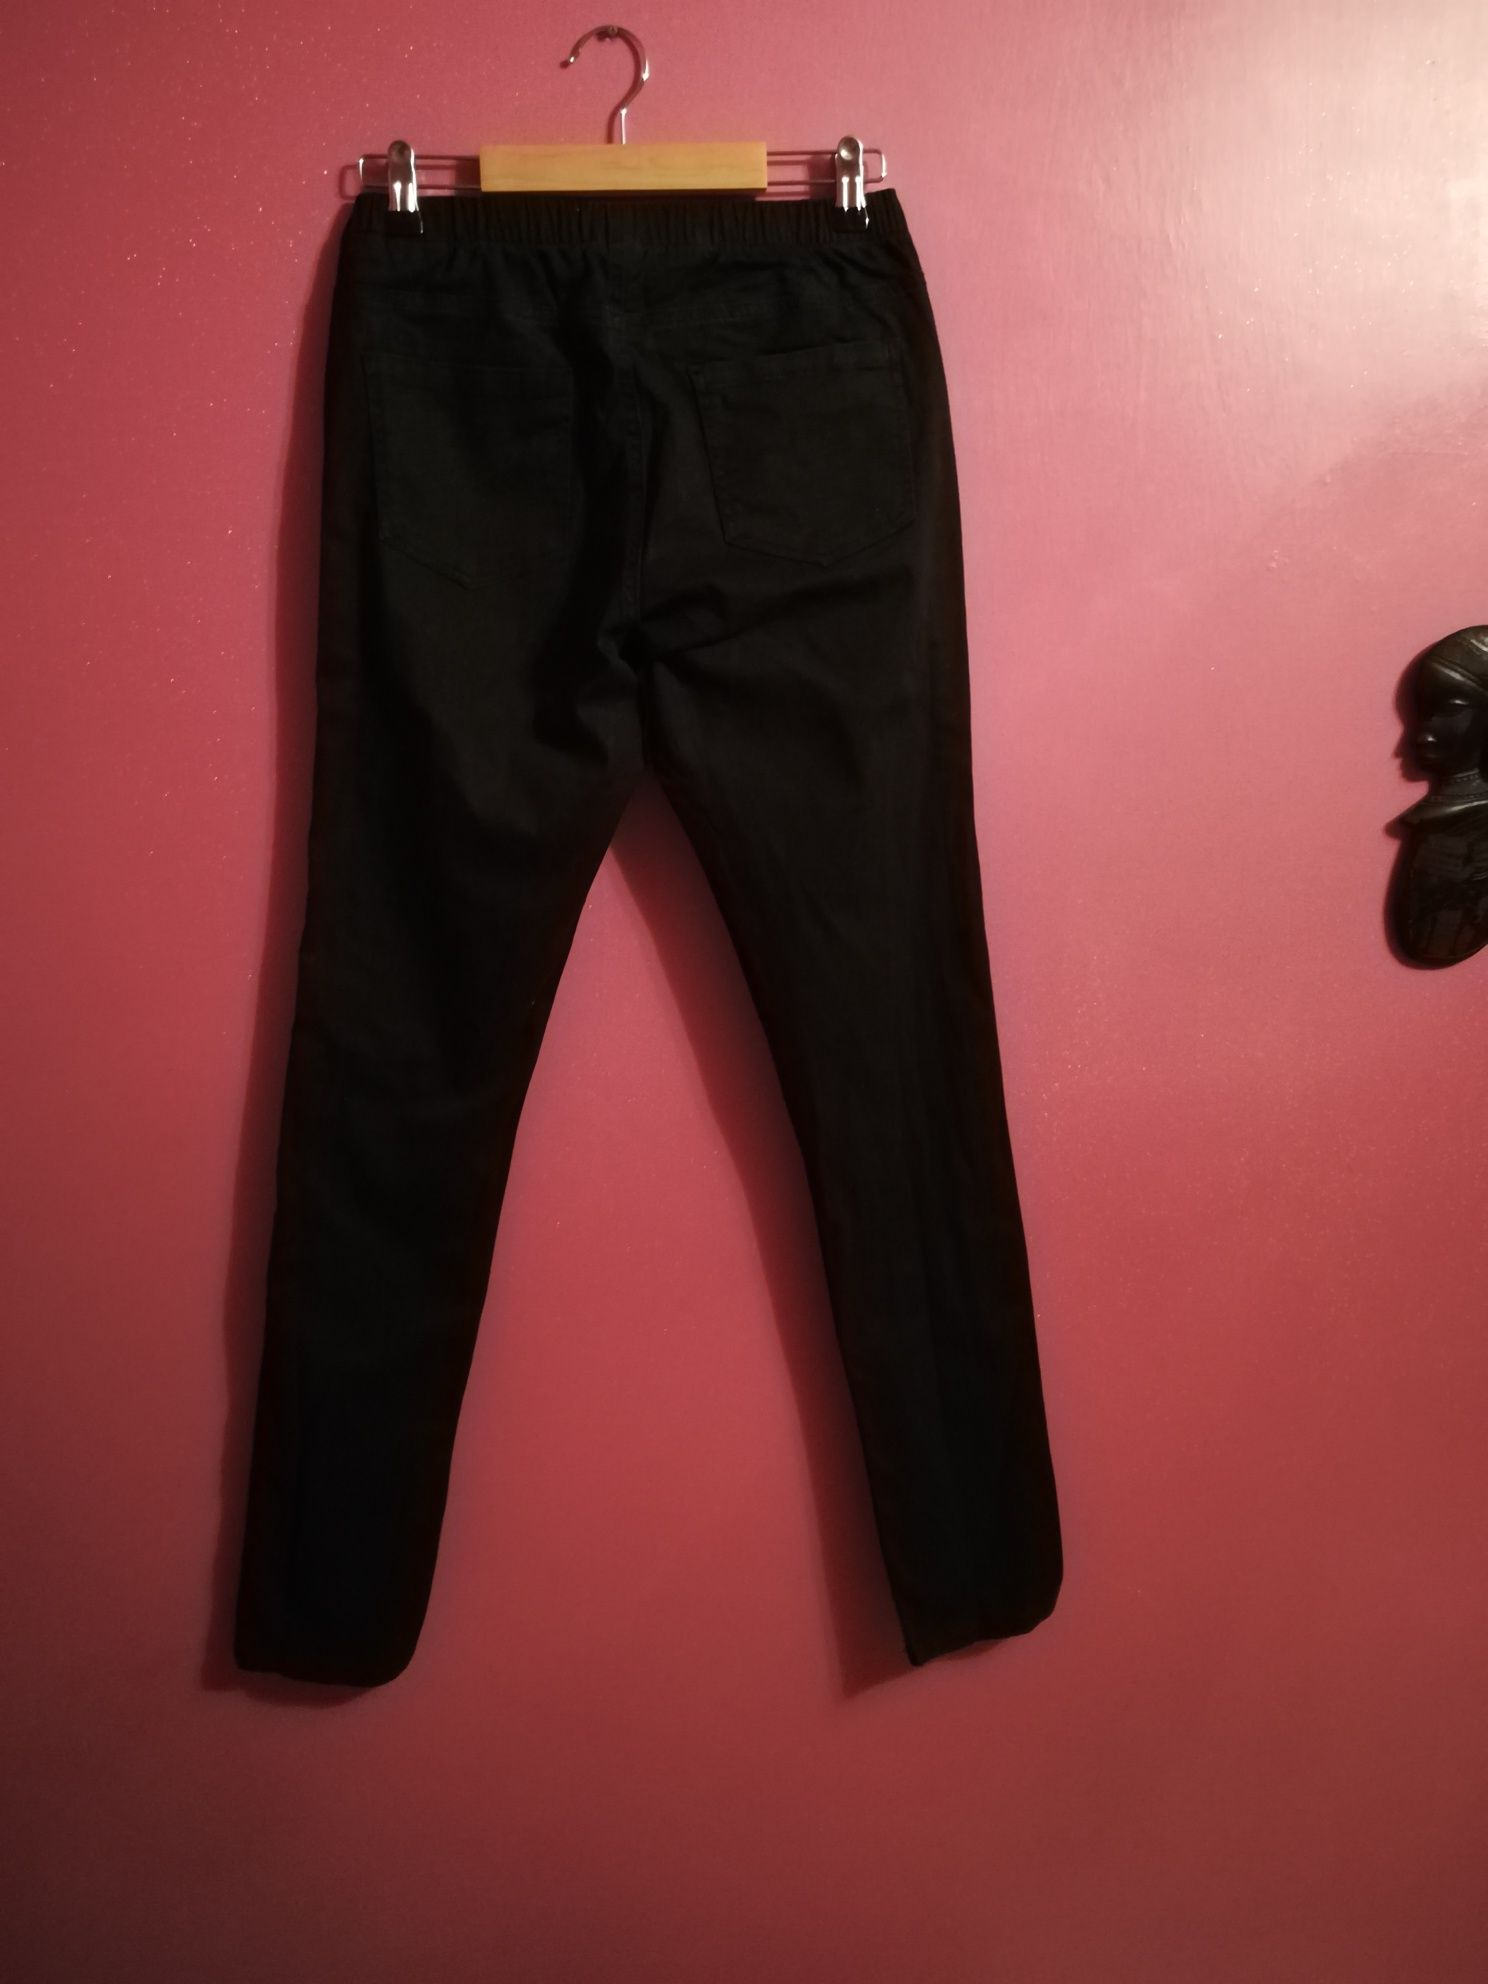 Spodnie damskie L/42 COLOURS czarne jeans